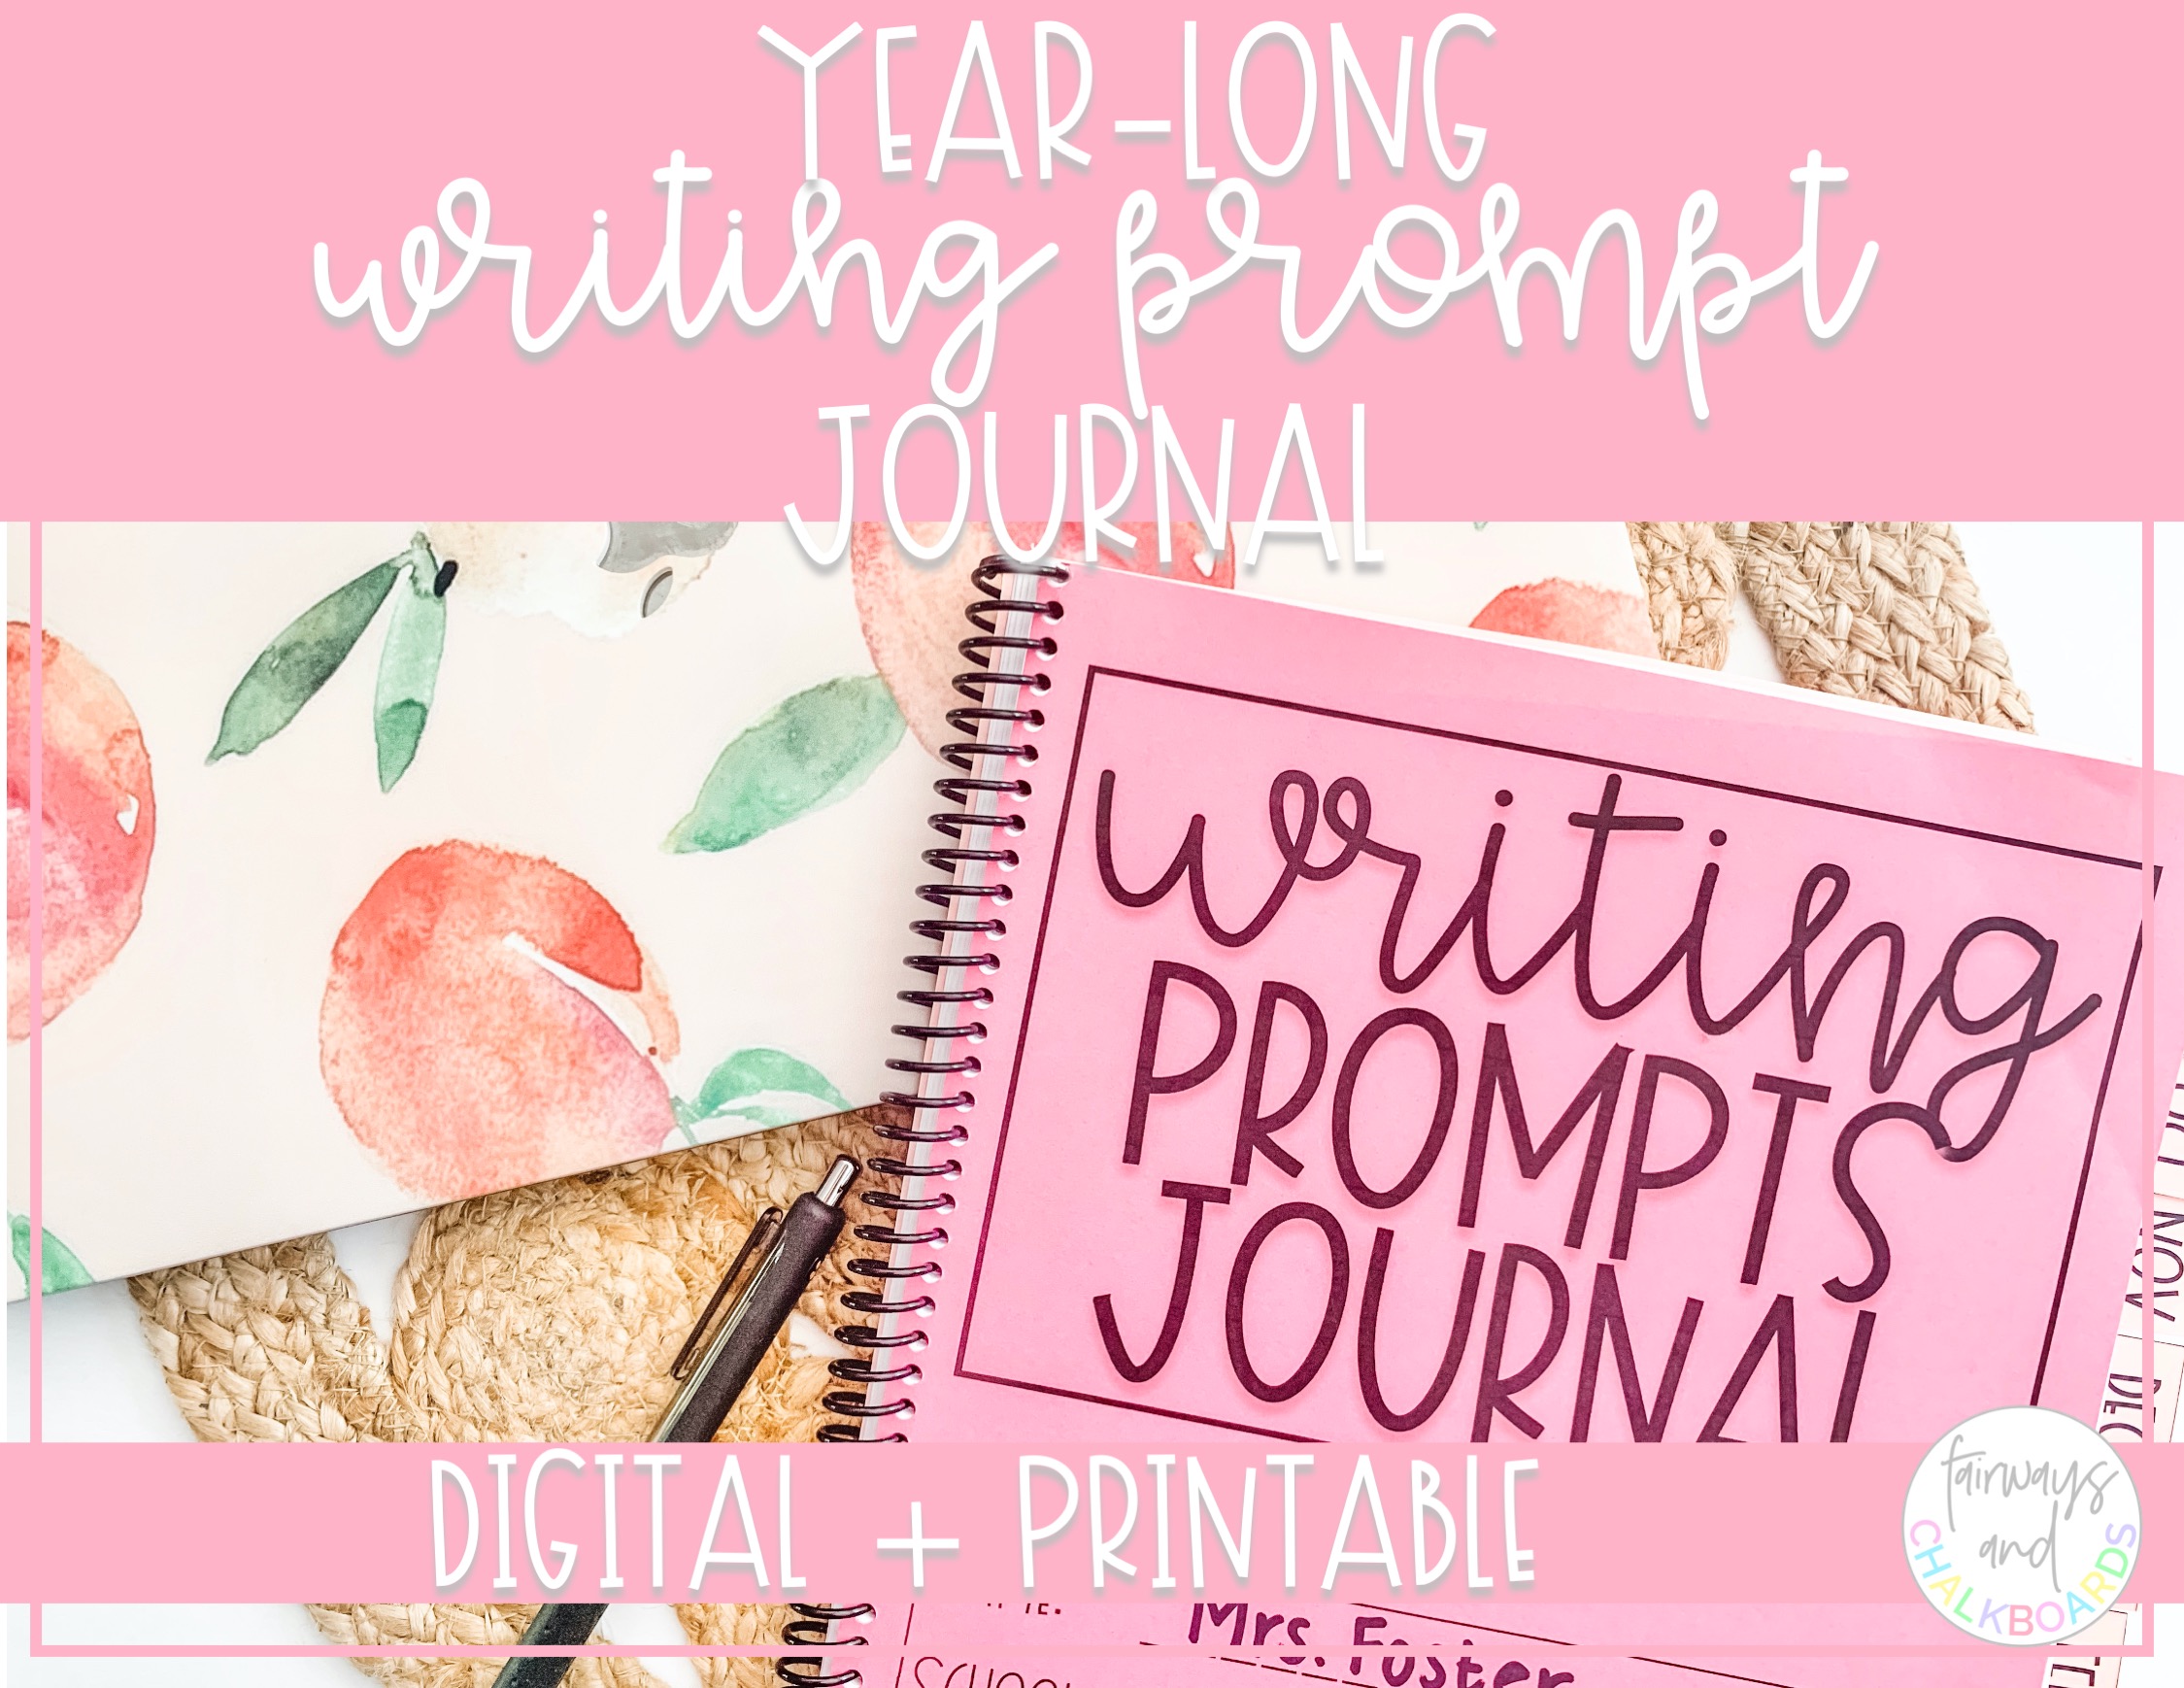 Year Long Weekly Prompt Journal | Digital and Printable